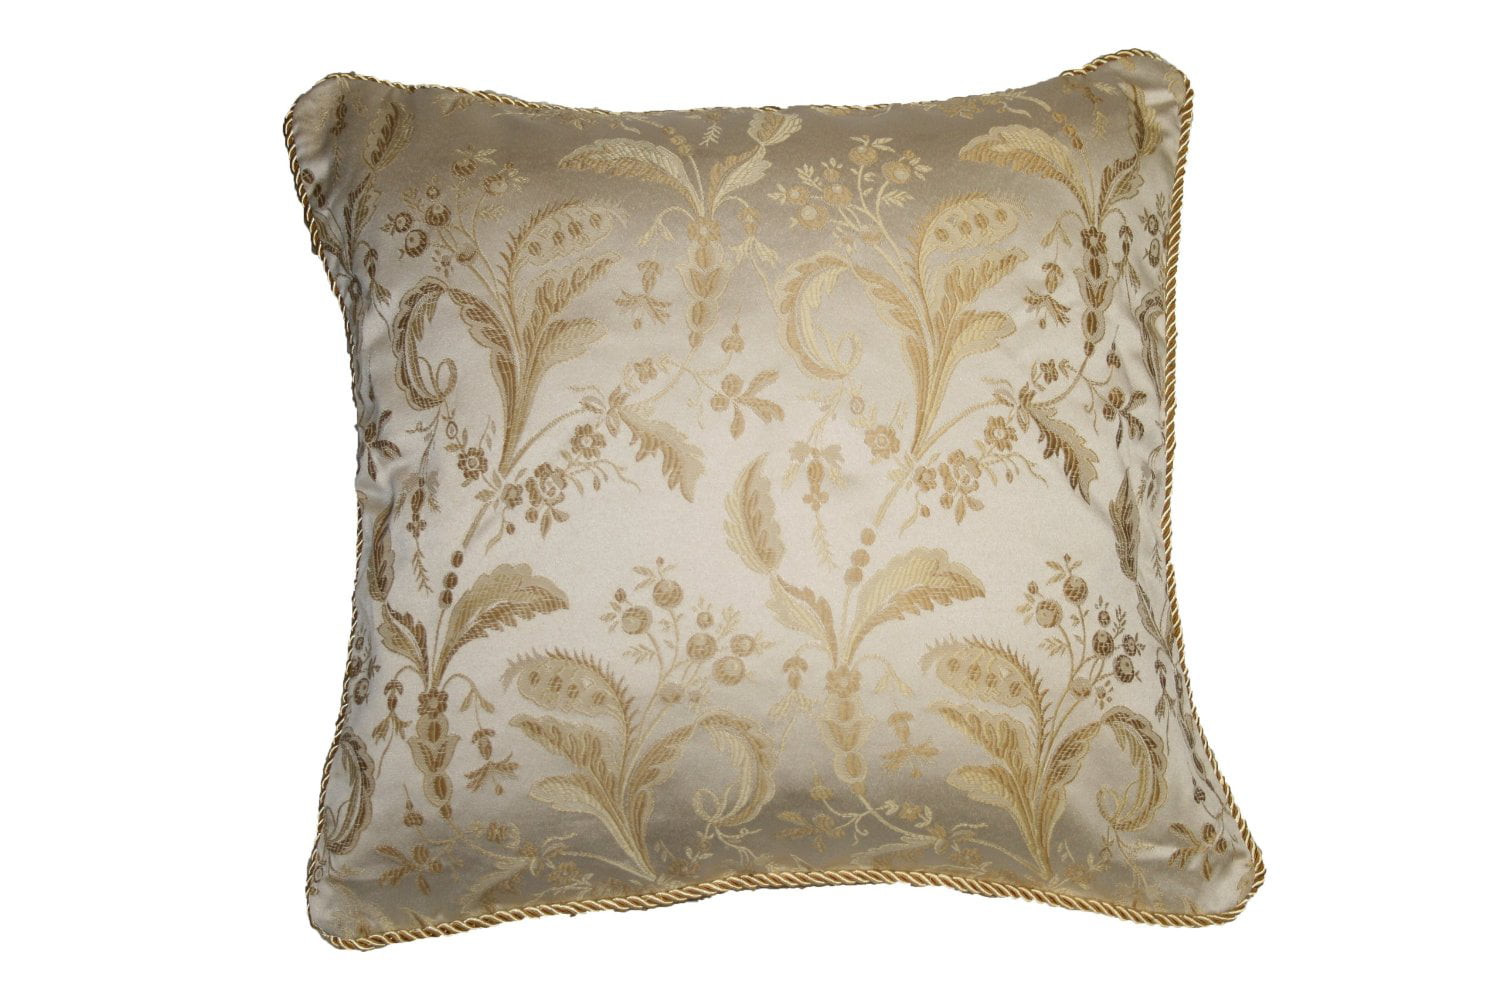 Luxury Damask Design Decorative Throw Pillow - Walmart.com - Walmart.com